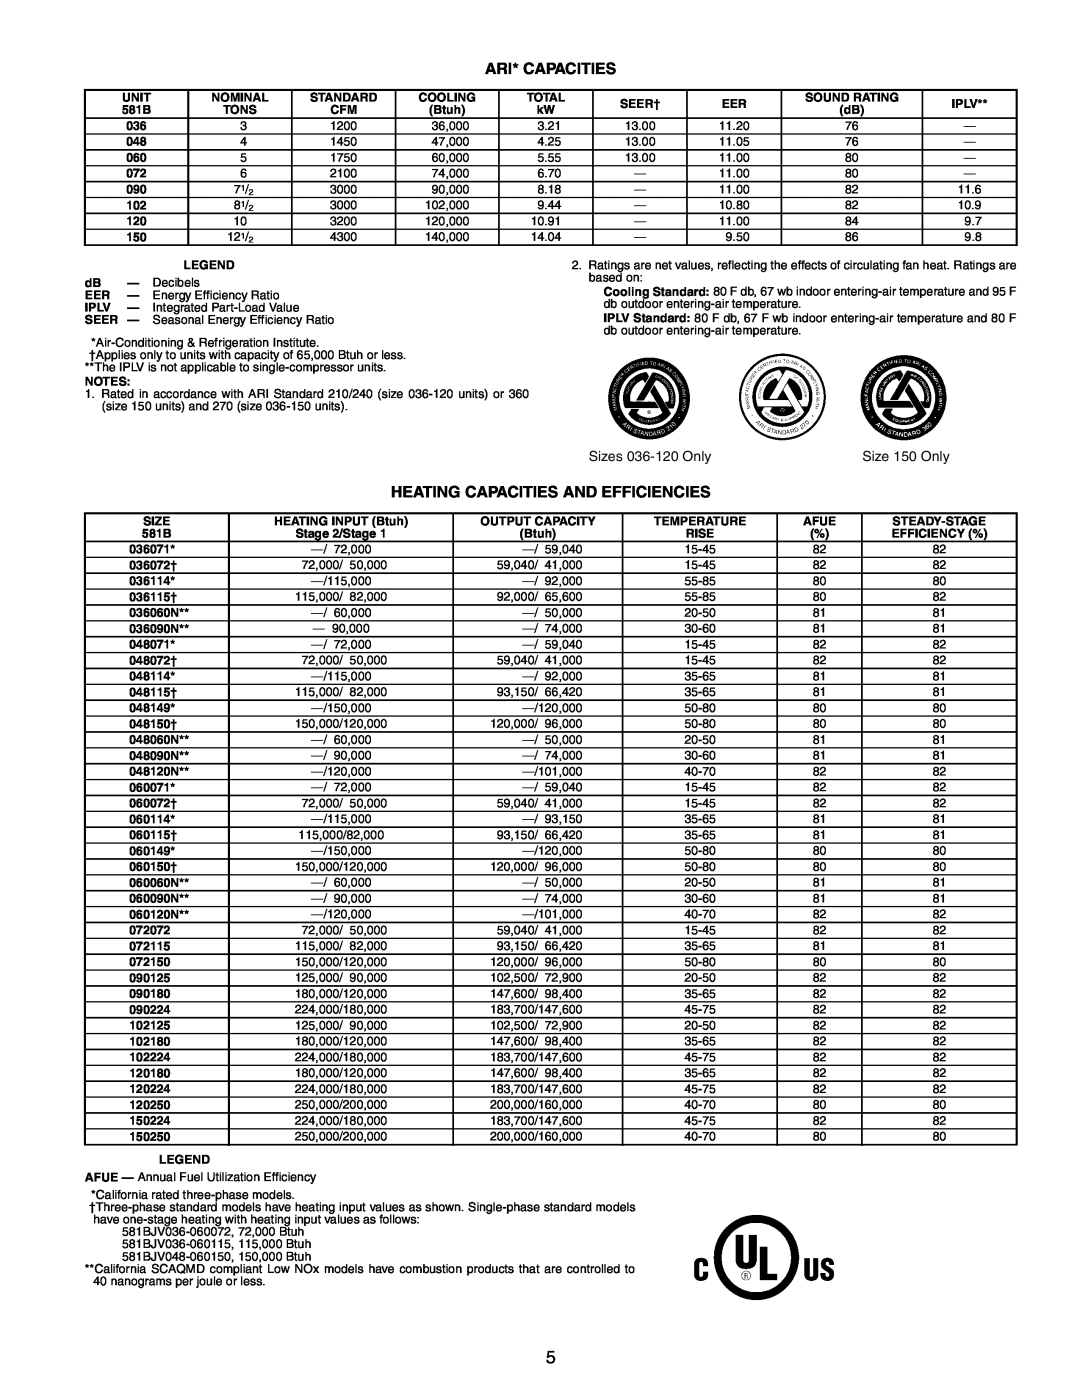 Bryant 581B manual Ari* Capacities, Heating Capacities And Efficiencies, Sizes 036-120OnlySize 150 Only 